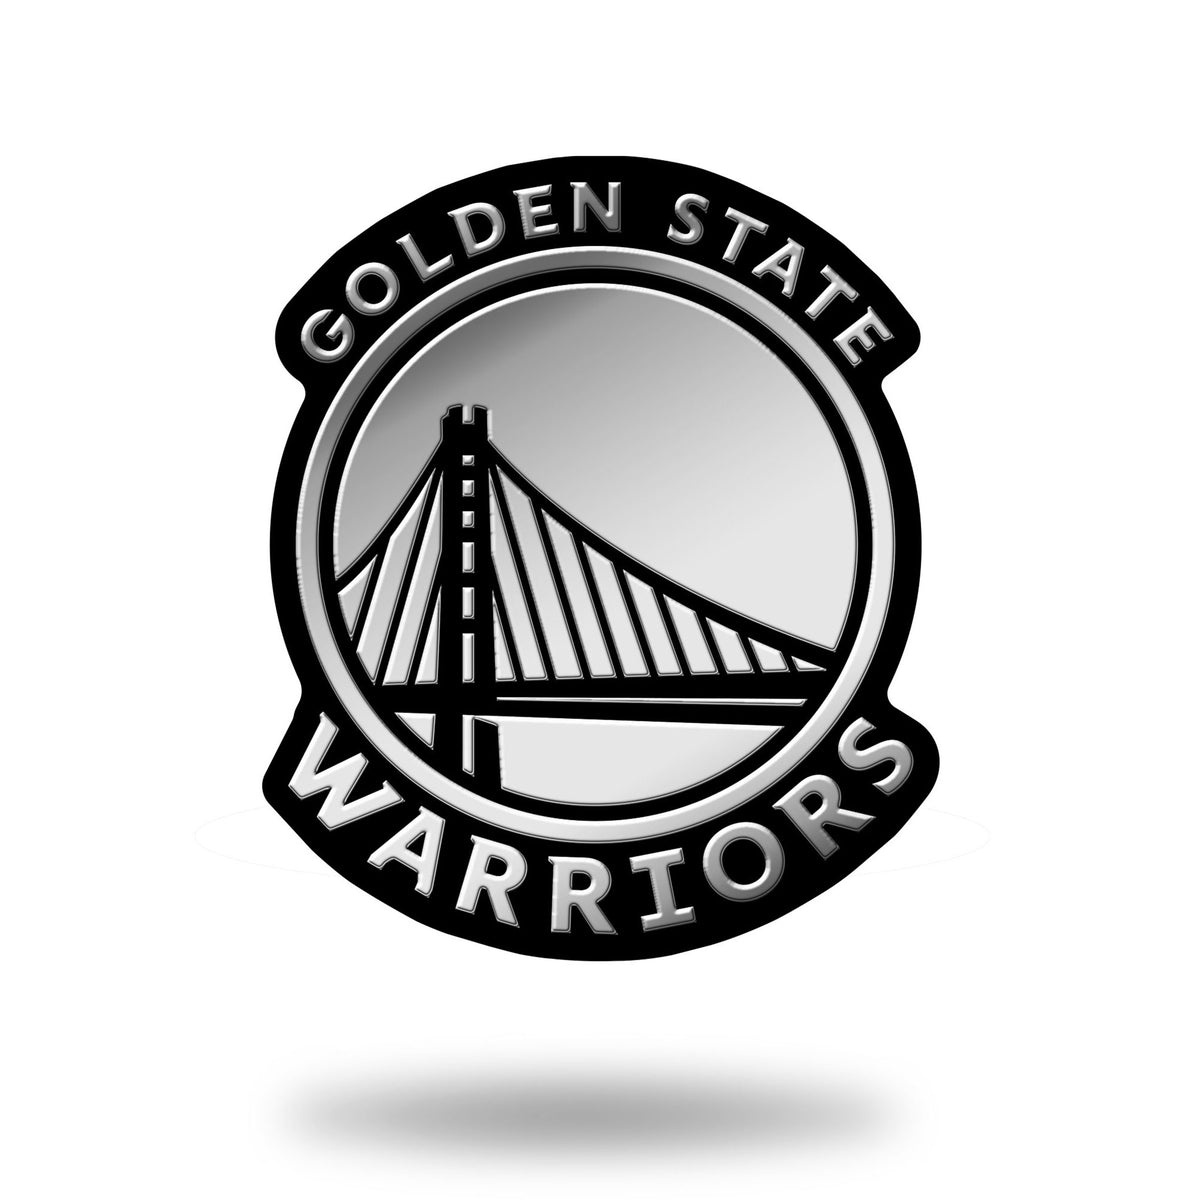 Golden State Warriors Molded Chrome Car Emblem